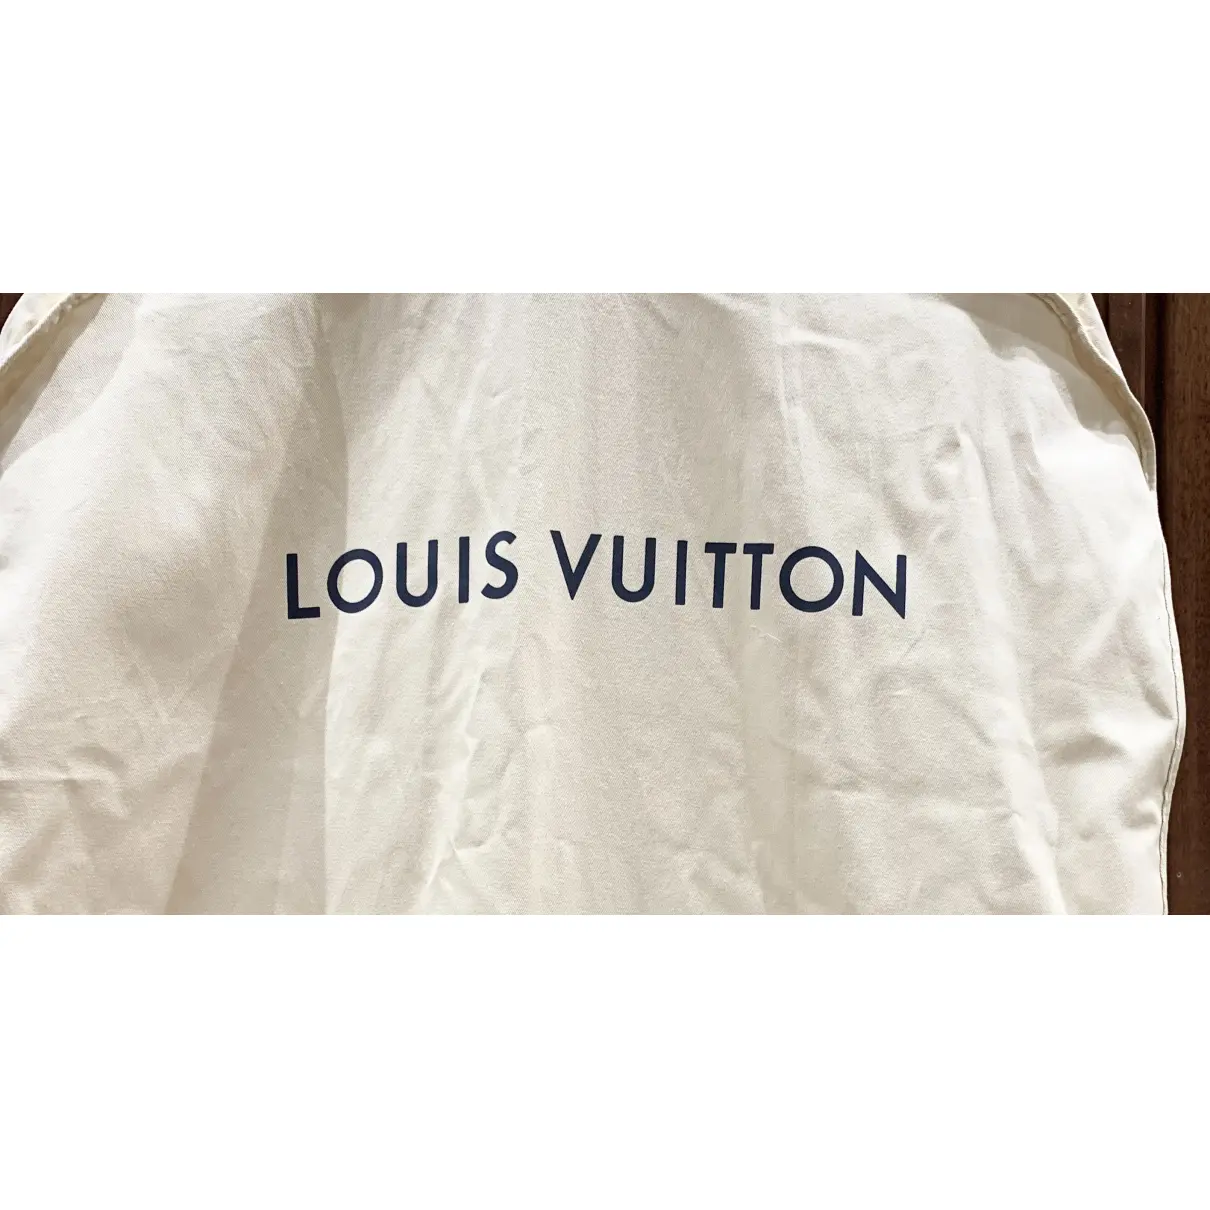 Buy Louis Vuitton Travel bag online